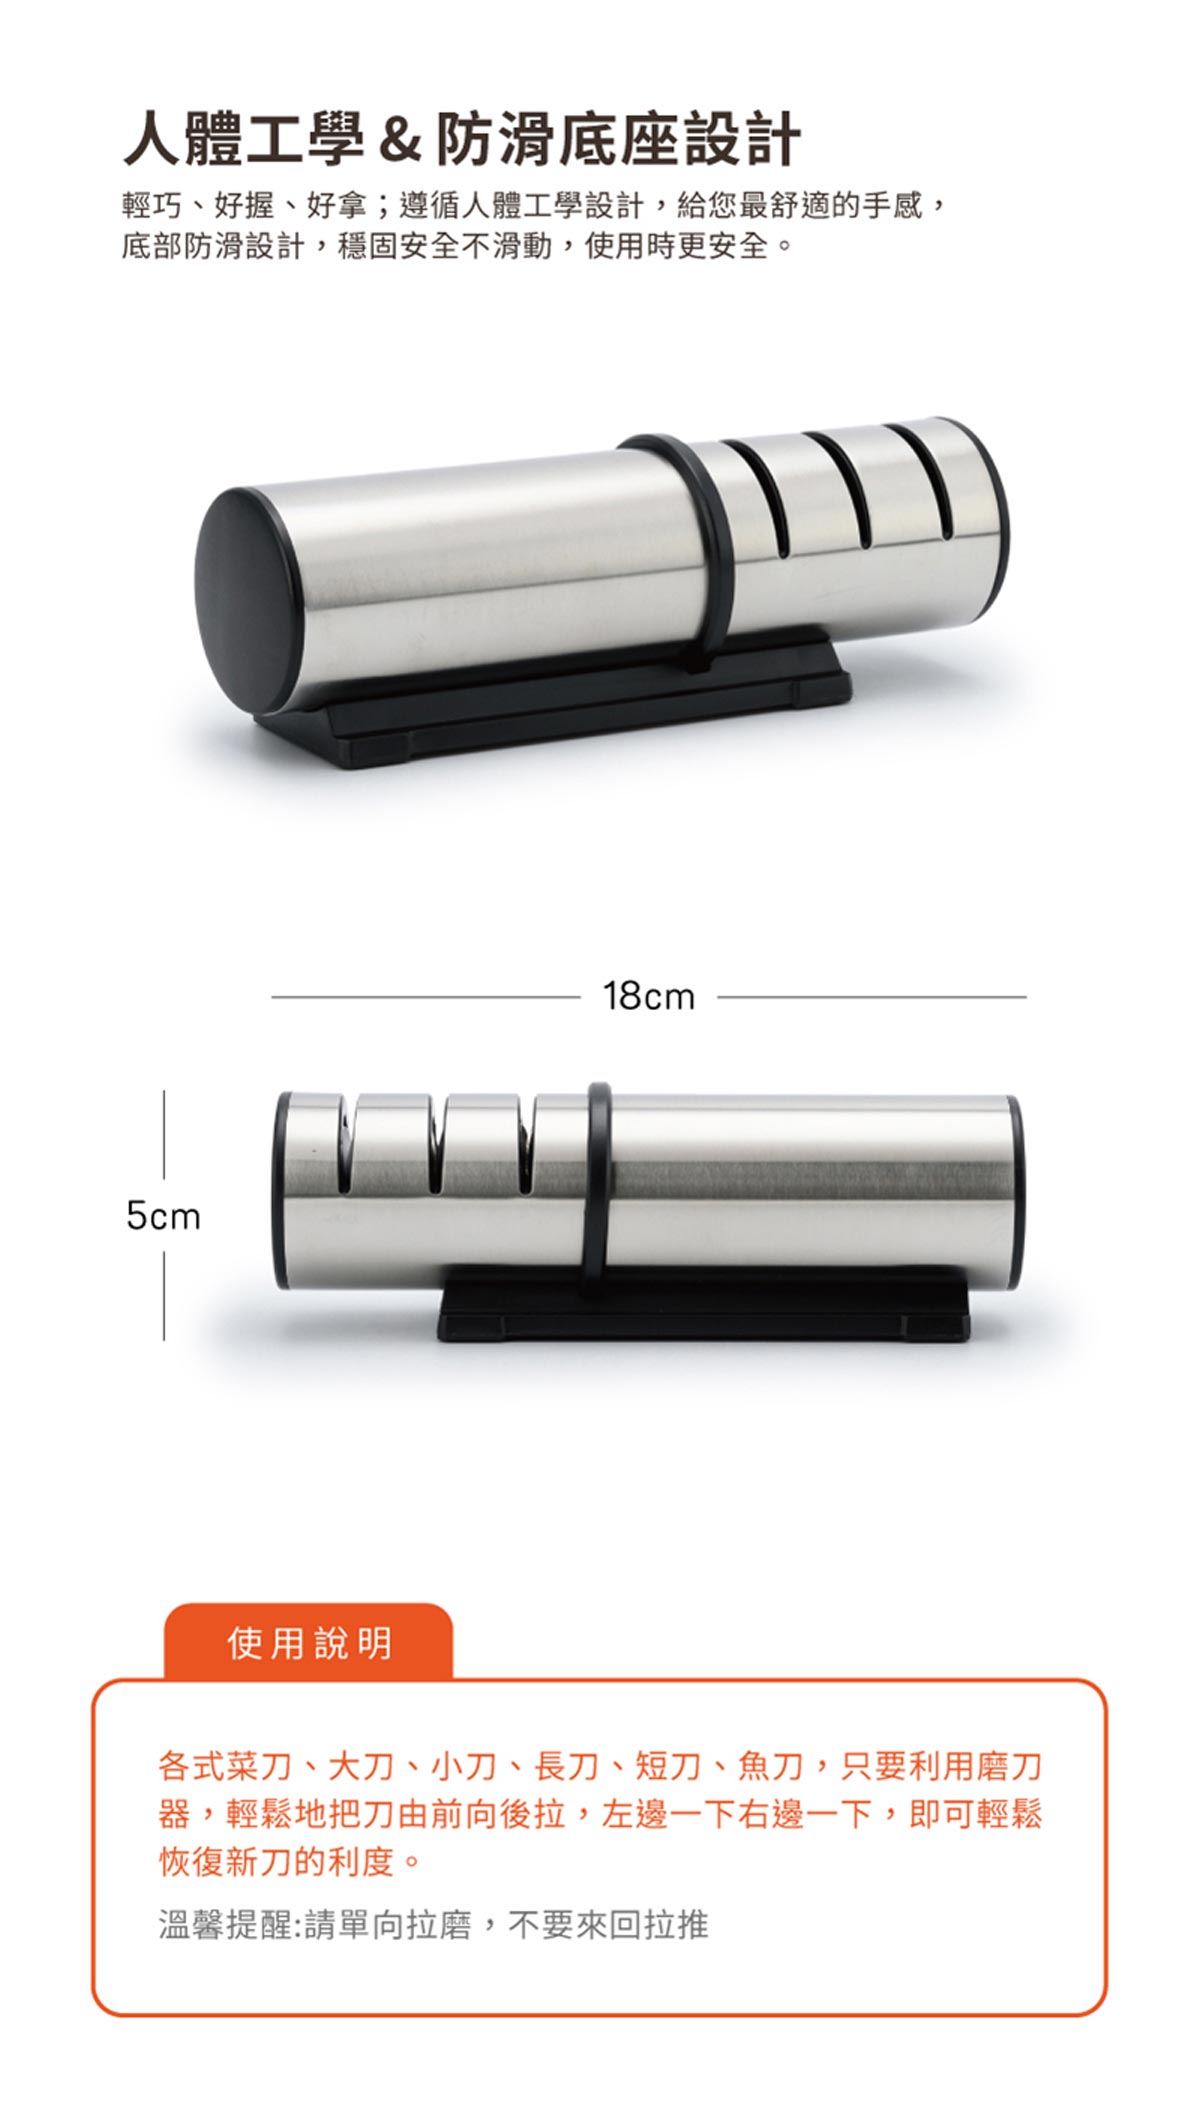 EC MEYER三孔磨刀器具有人體工學與防滑底座設計，尺寸為18*5cm。